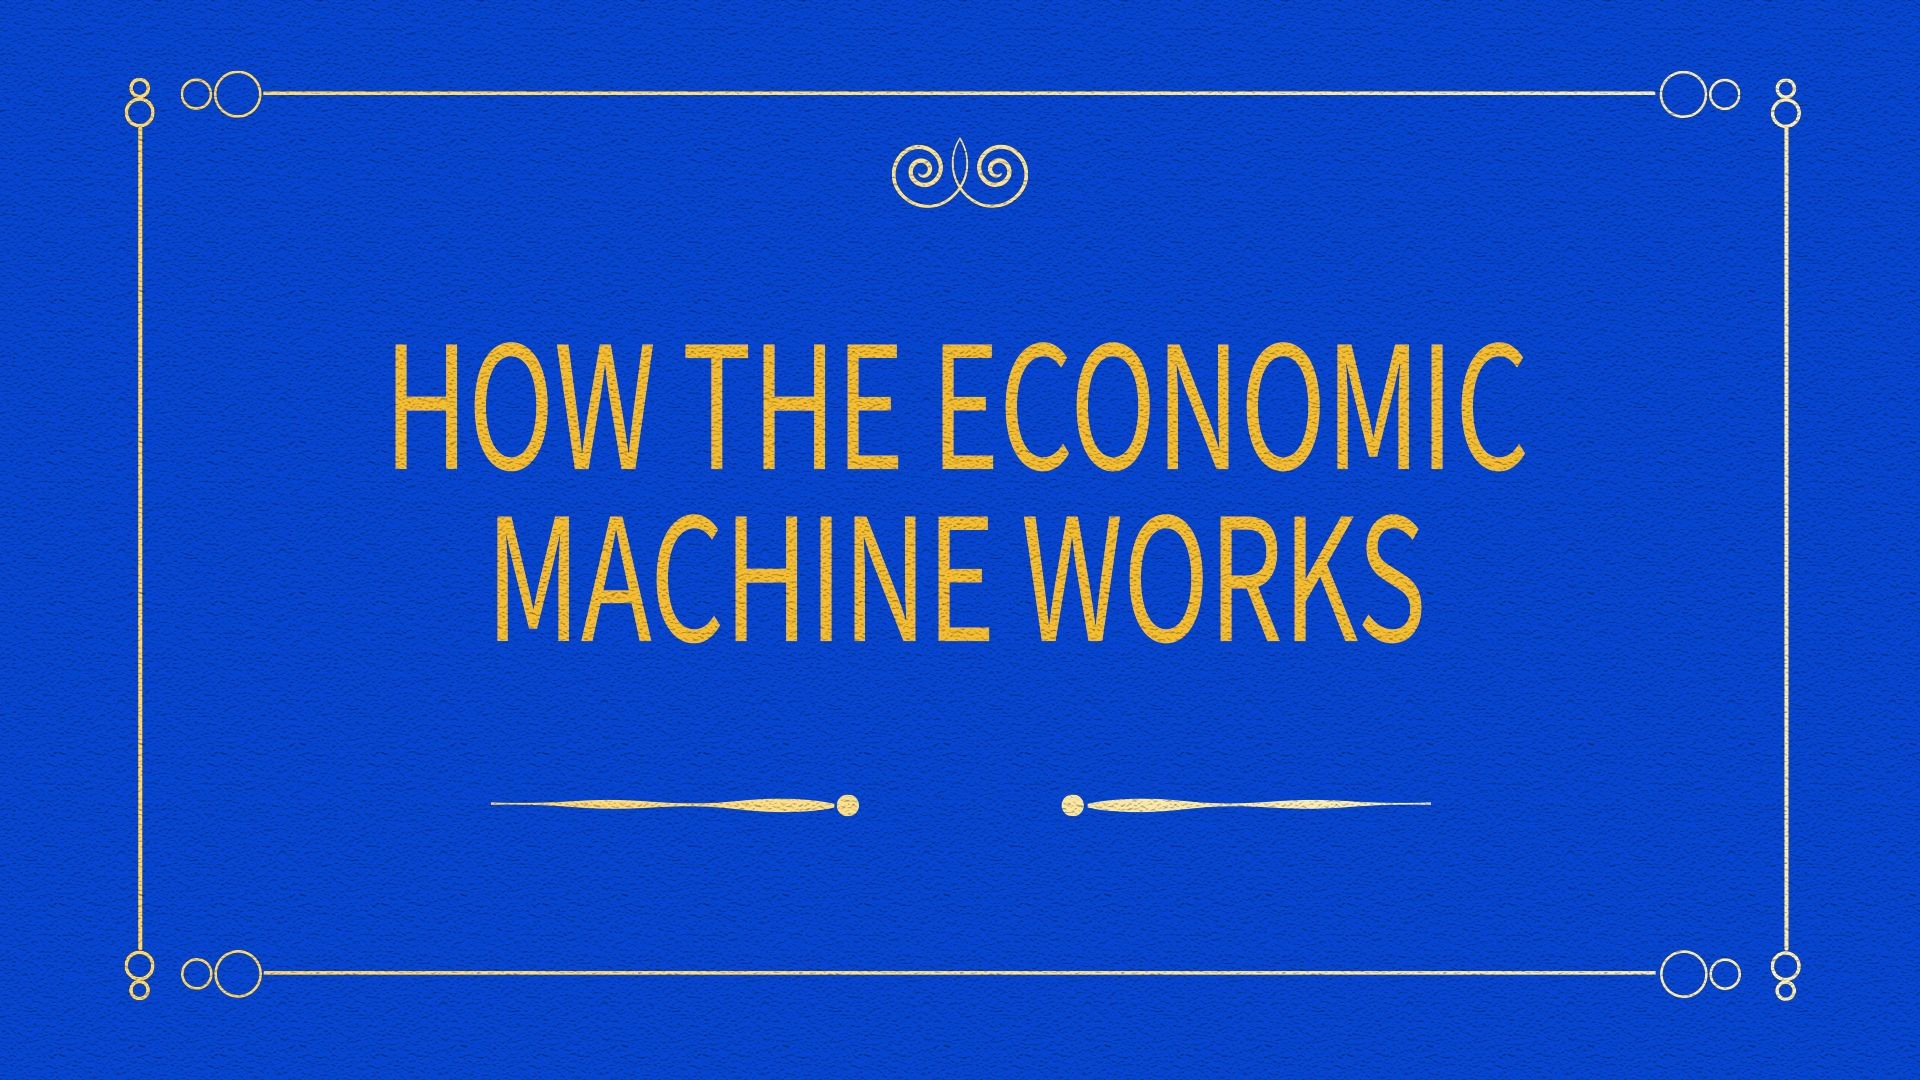 The Economic Machine